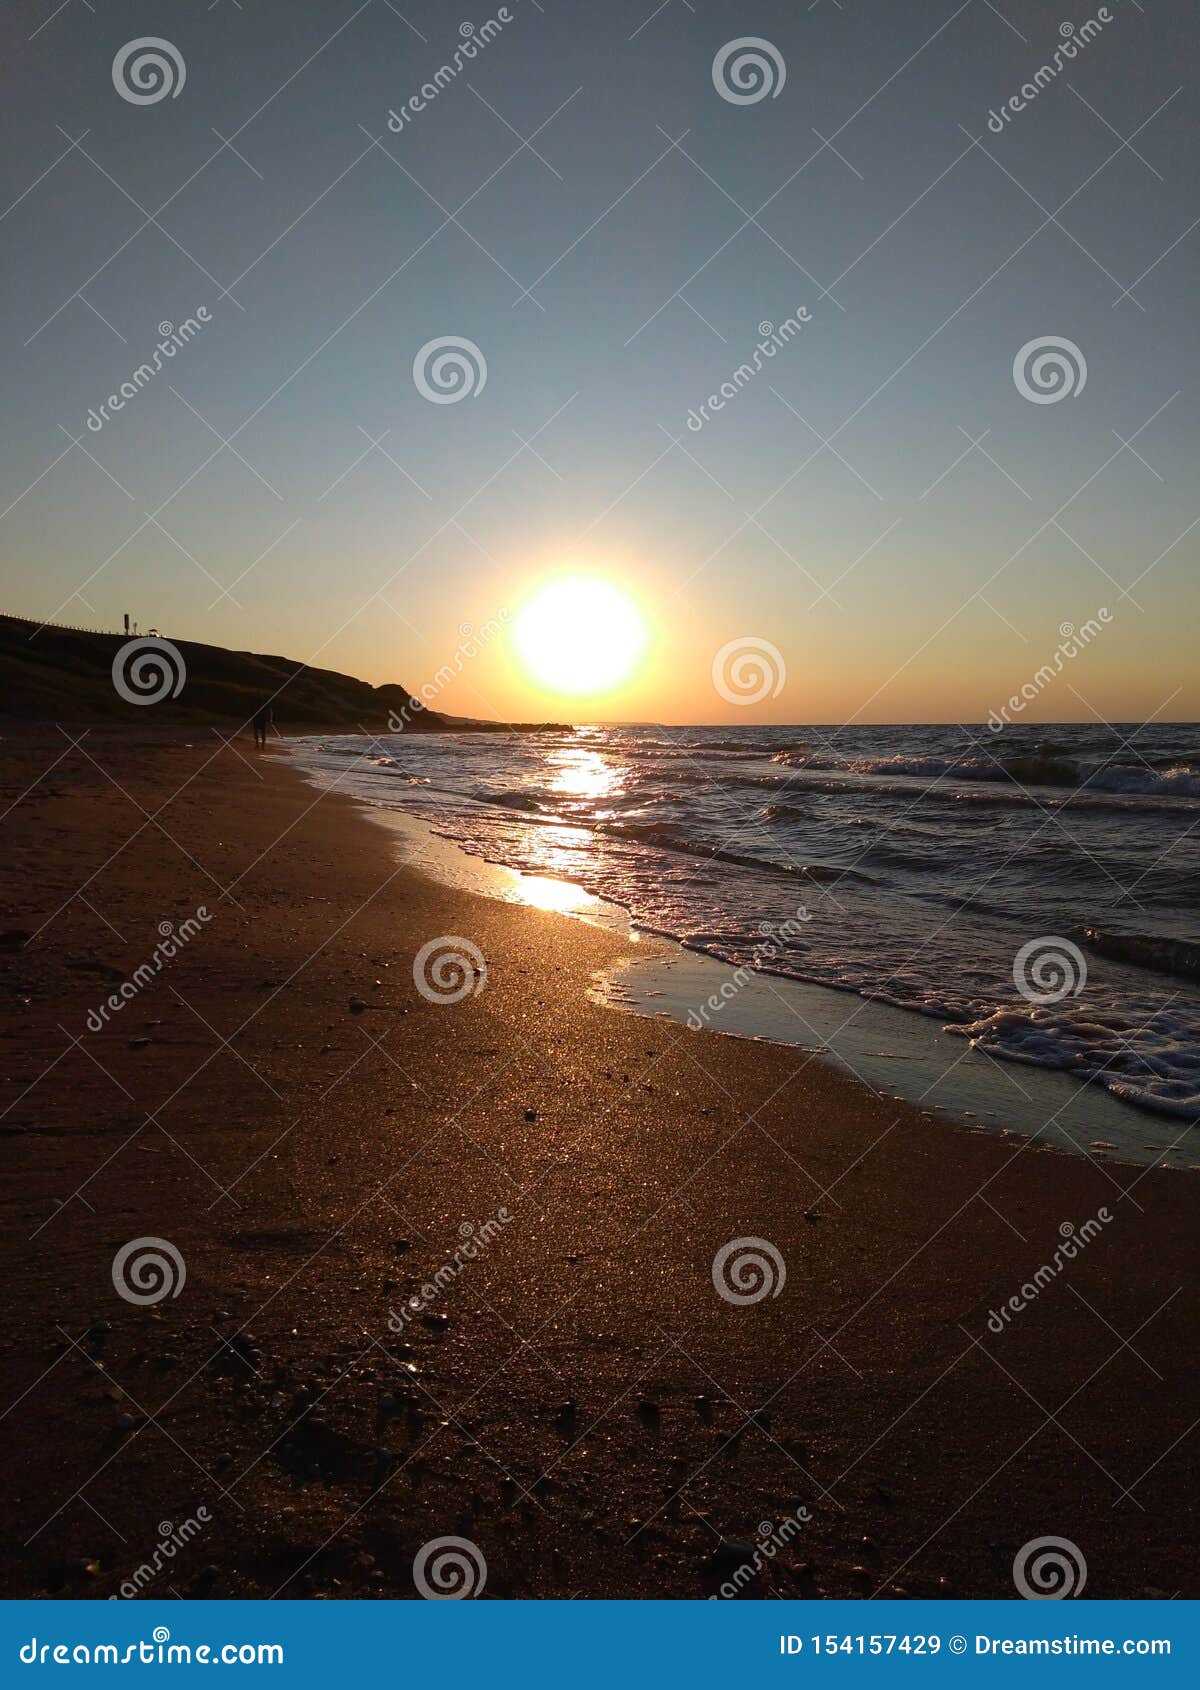 sunset on the azov sea